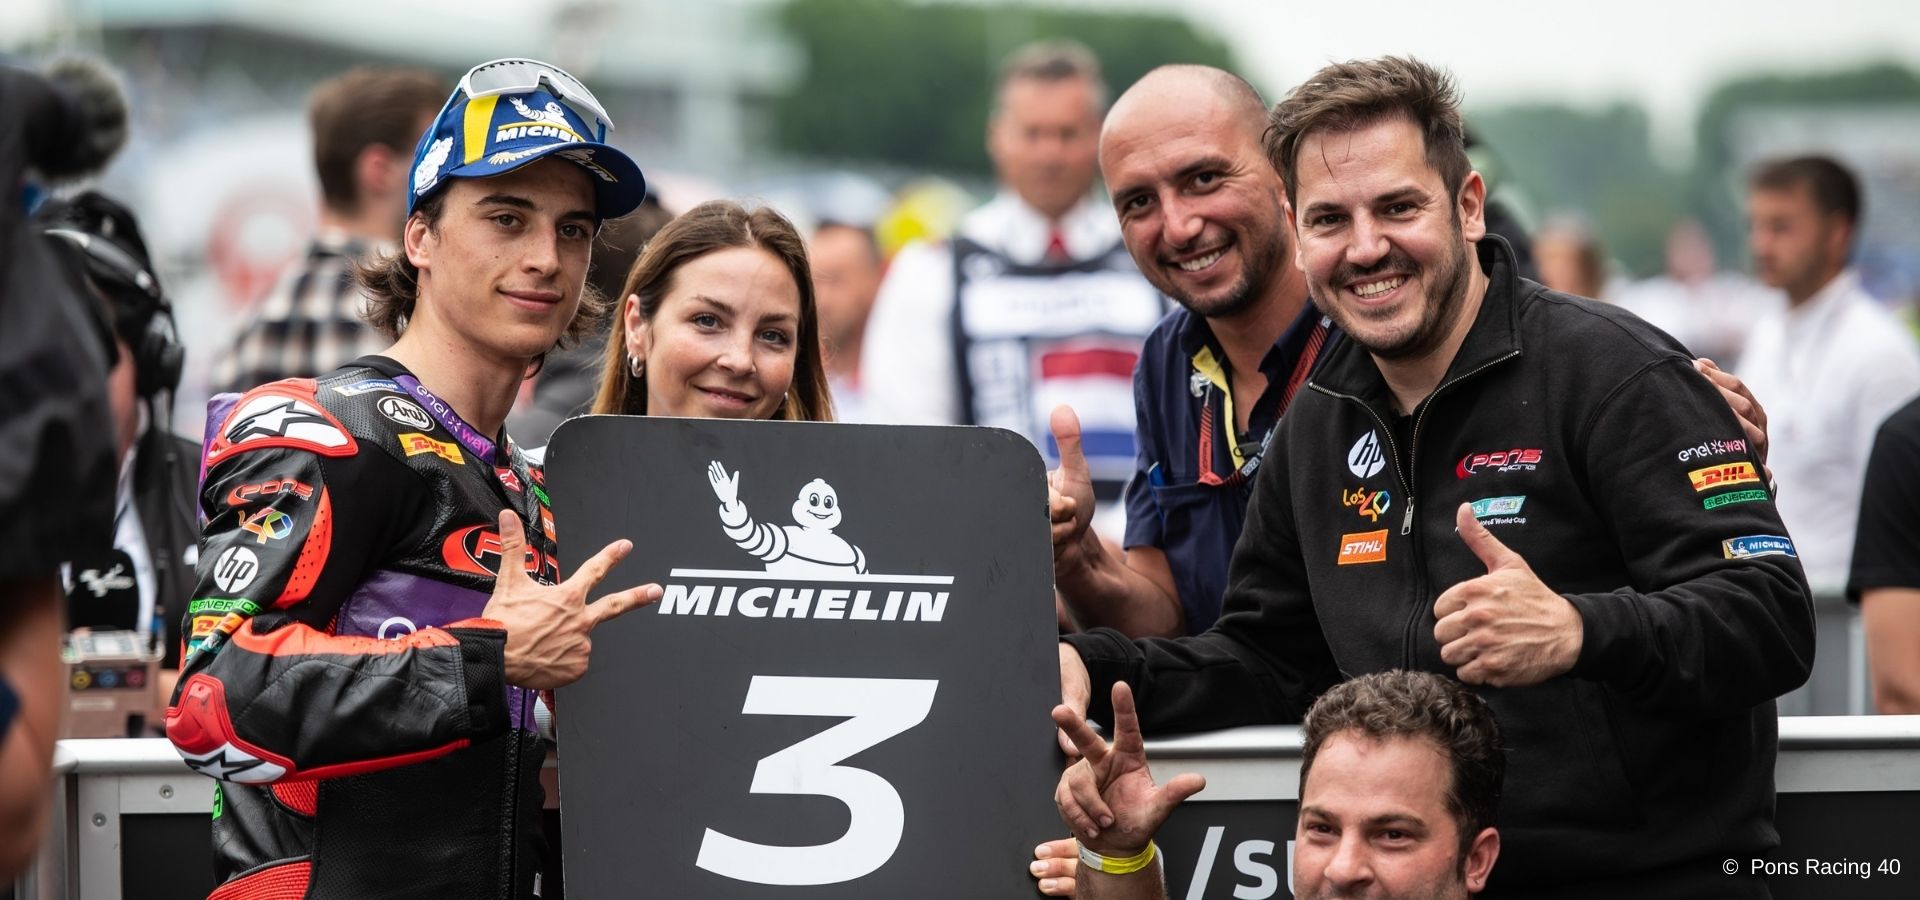 MotoE in Assen - Casadei returns to the podium in the Dutch GP